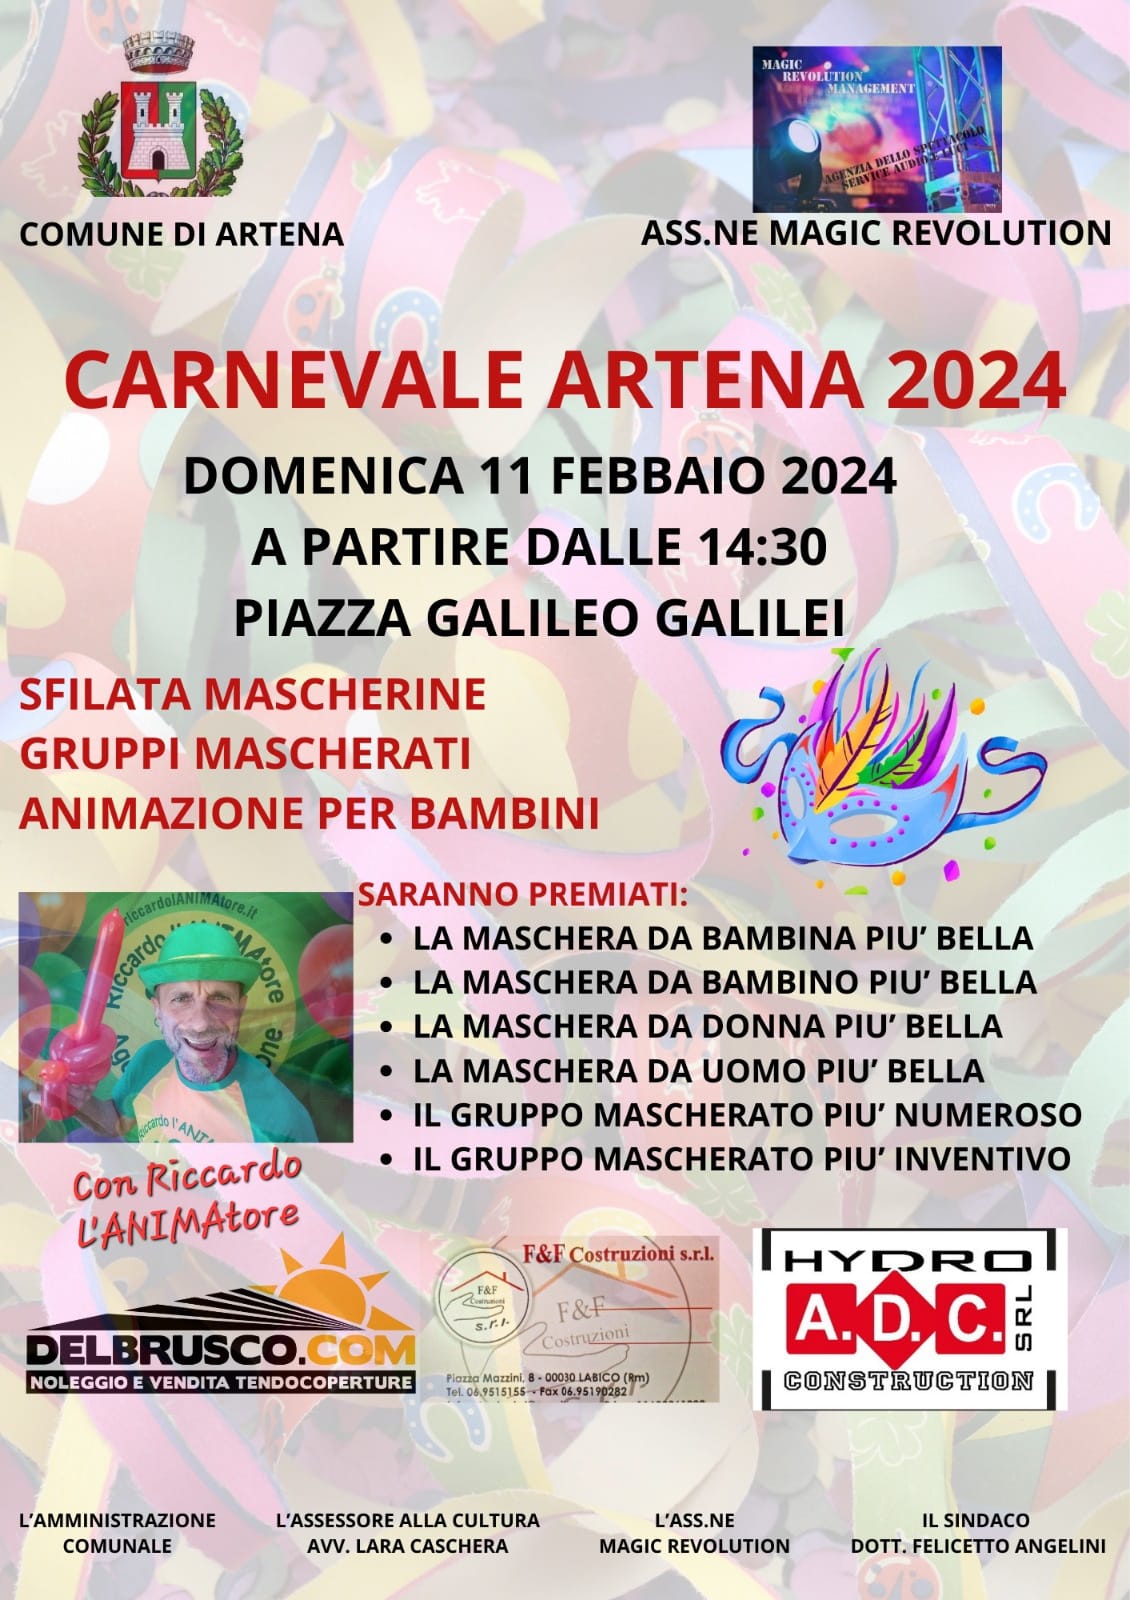 Artena: Carnevale 2024 @ Comune di Artena (RM)